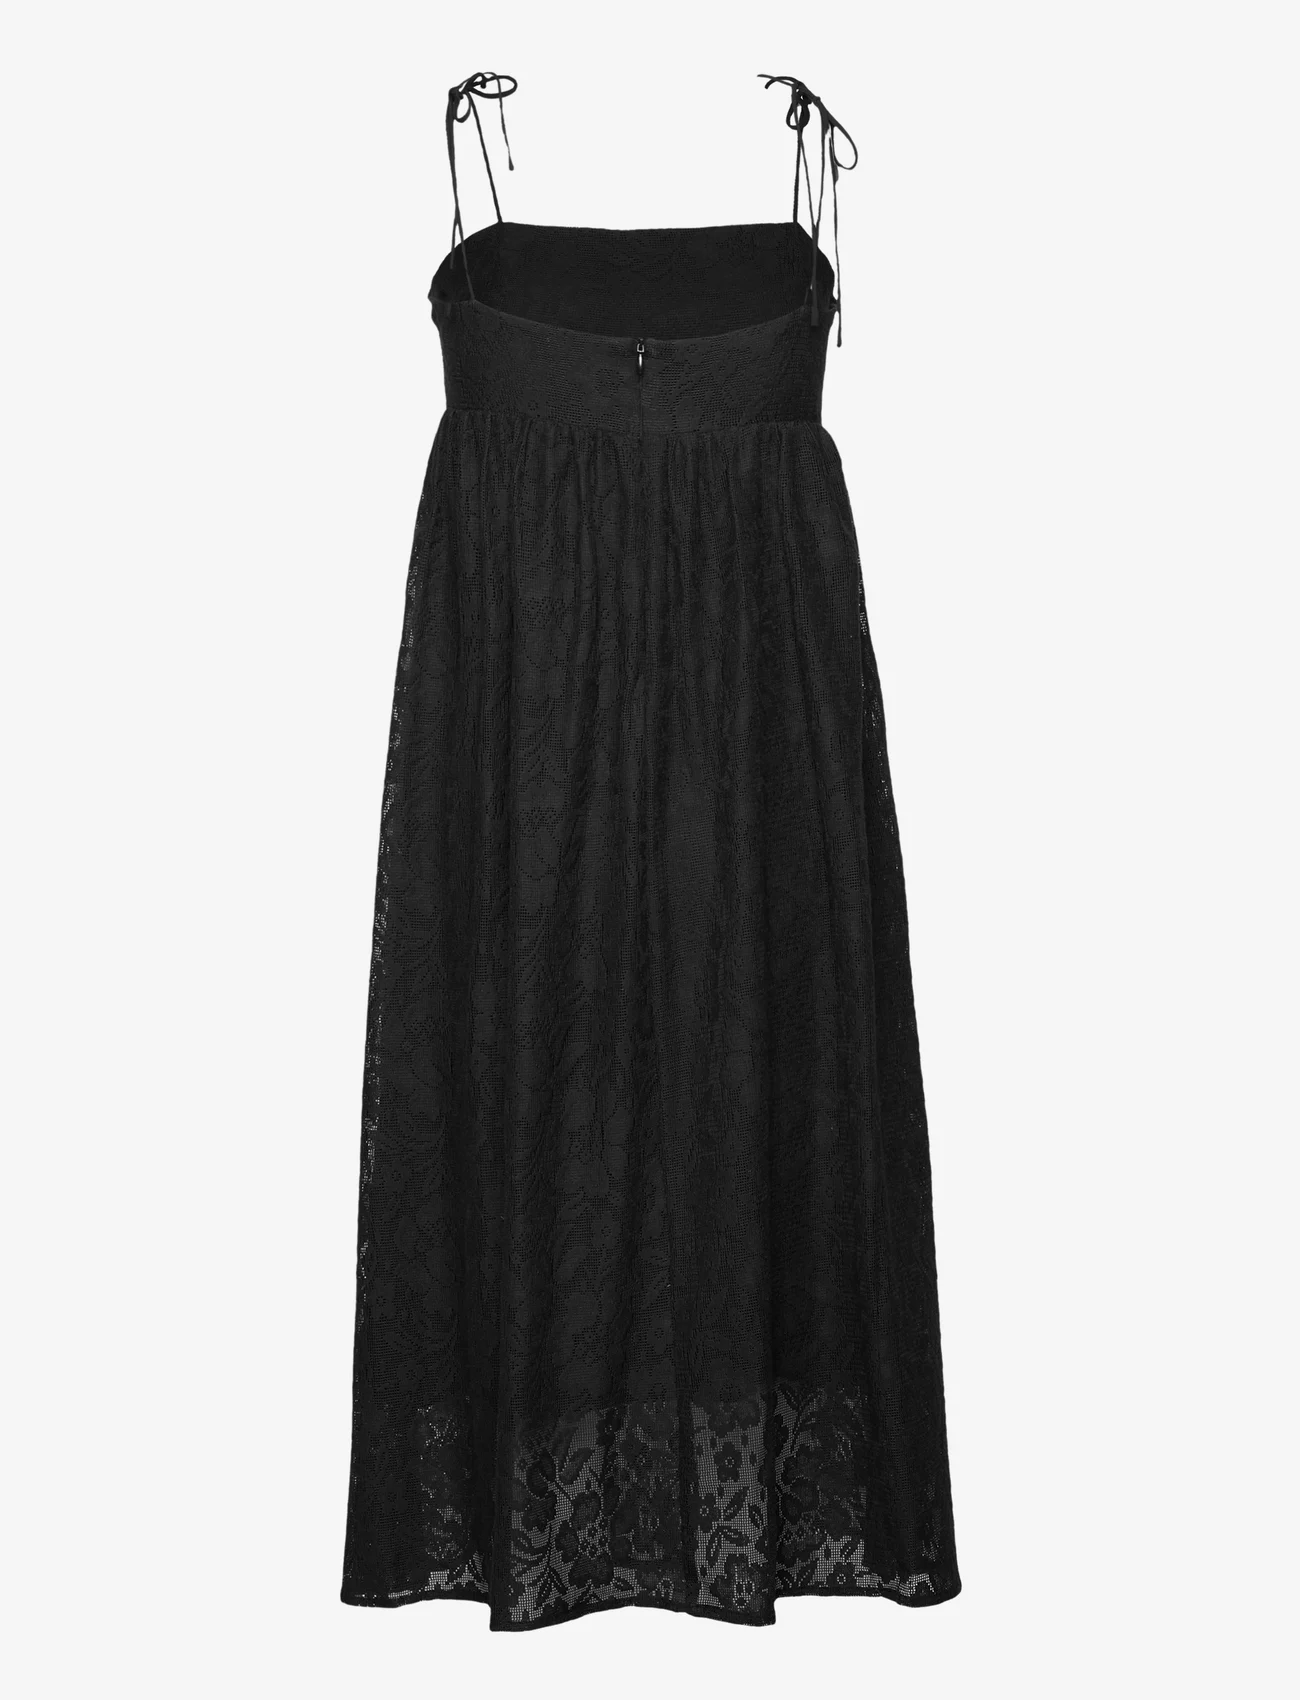 Notes du Nord - Faiza Dress - nėriniuotos suknelės - noir - 1